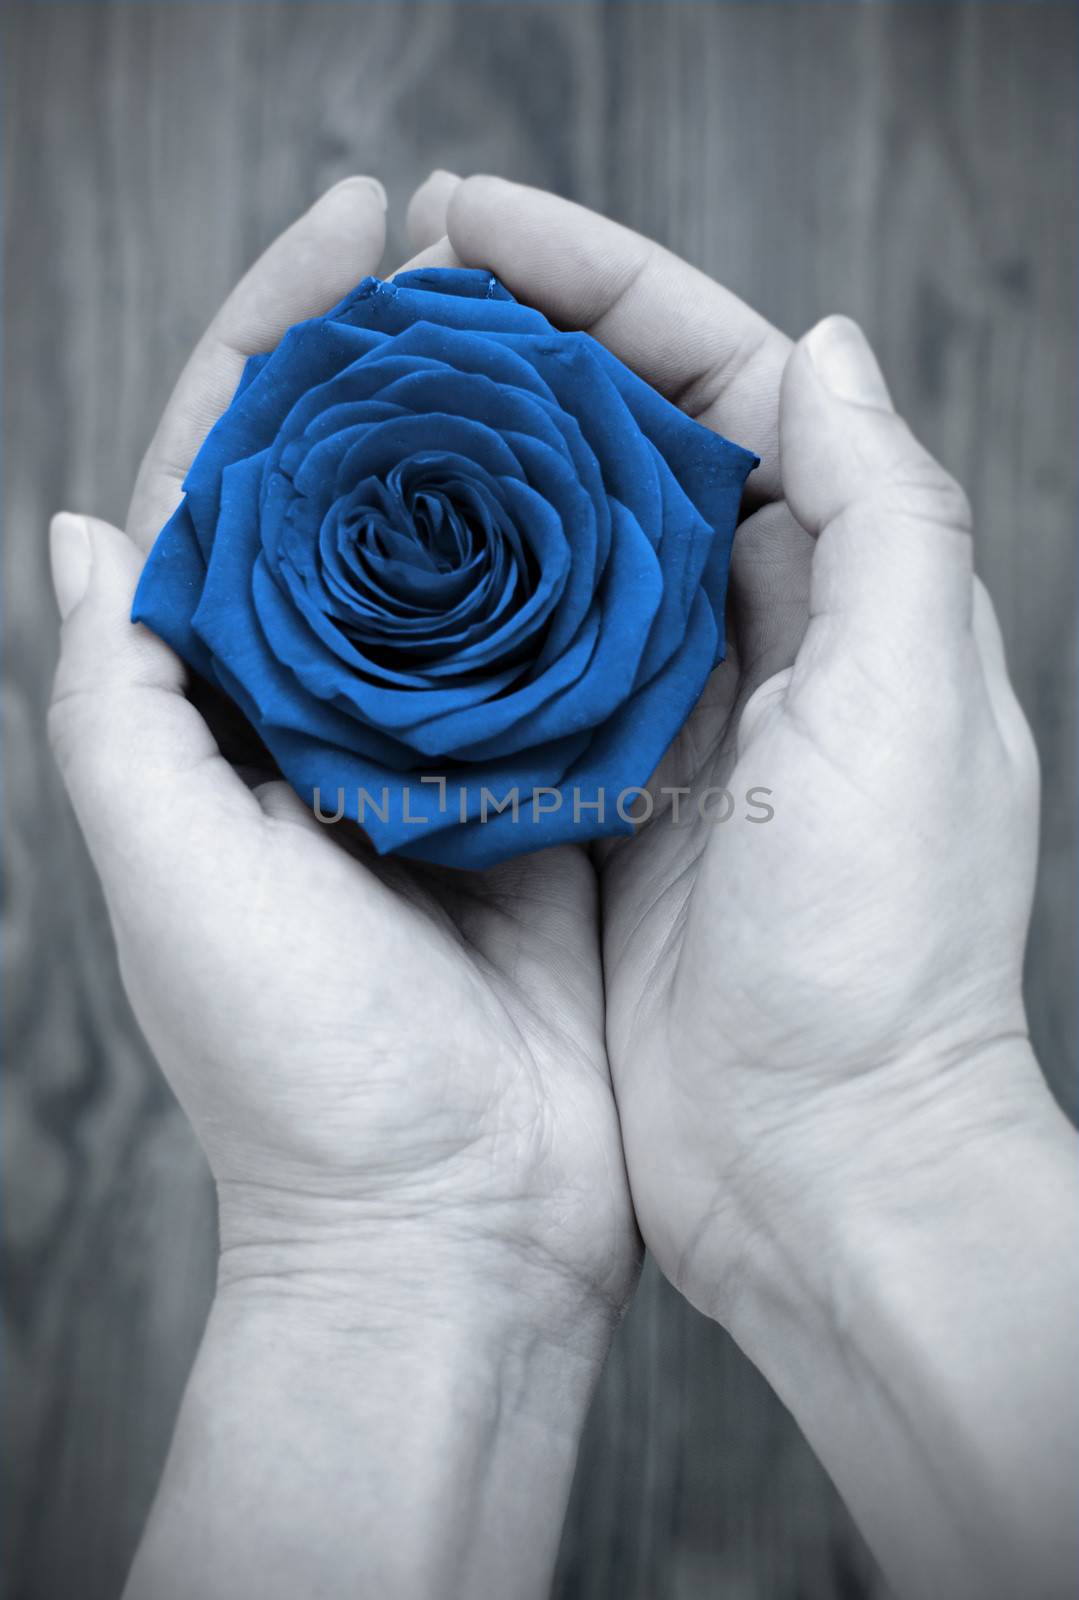 Rose by unikpix